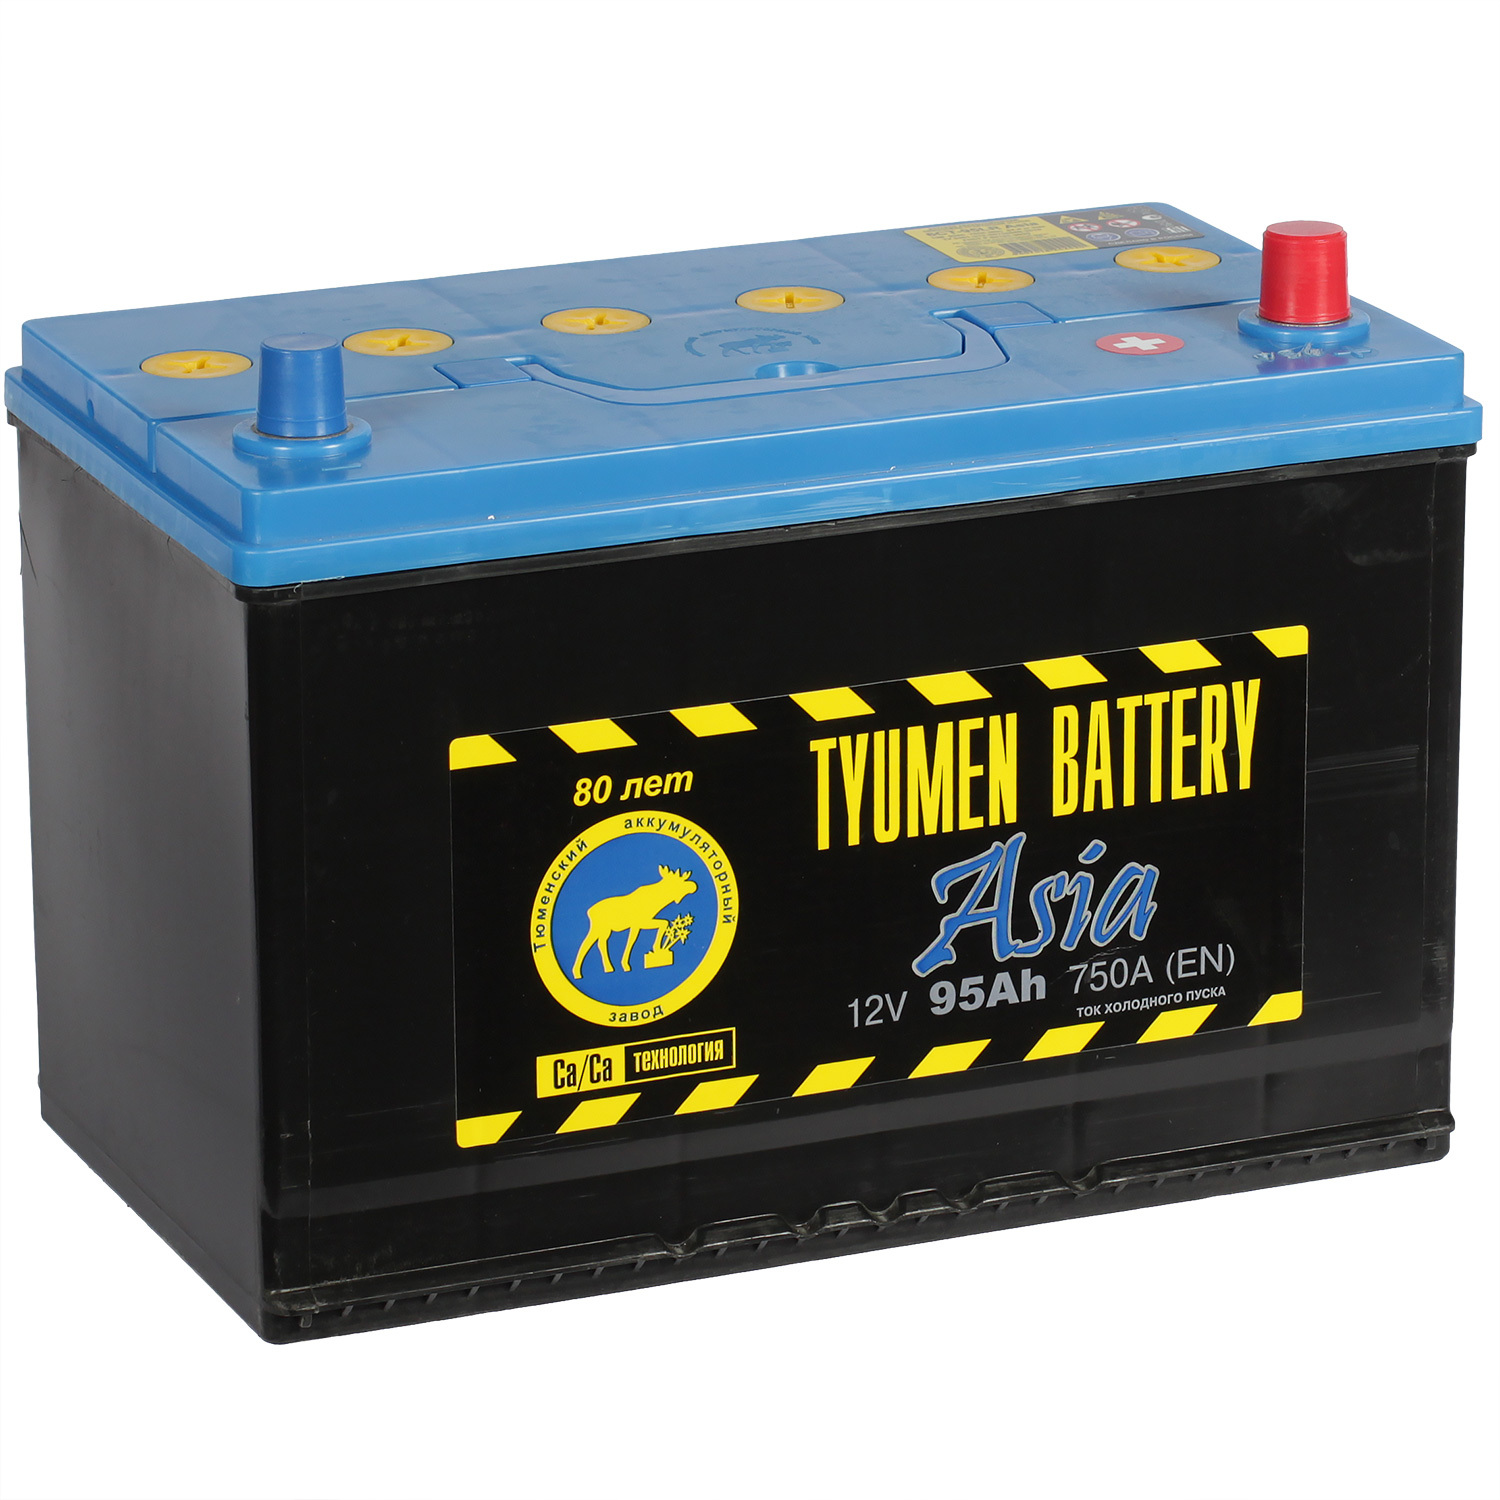 Tyumen Battery Автомобильный аккумулятор Tyumen Battery 95 Ач обратная полярность D31L tyumen battery автомобильный аккумулятор tyumen battery asia 40 ач обратная полярность b19l